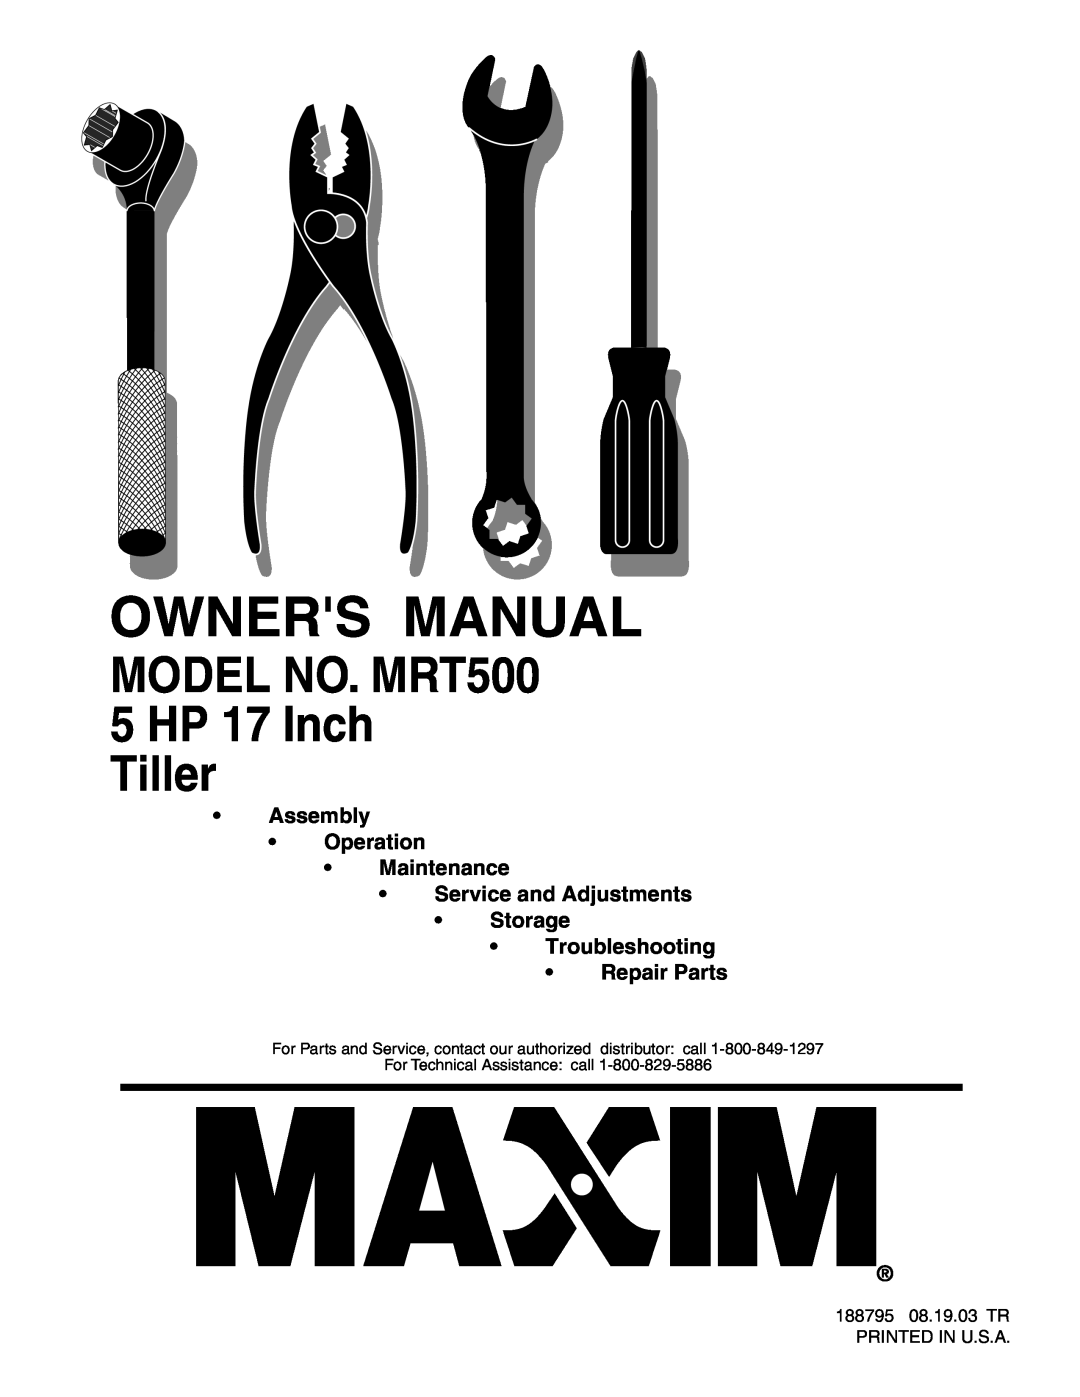 Poulan owner manual Owners Manual, MODEL NO. MRT500 5 HP 17 Inch Tiller, Troubleshooting Repair Parts 